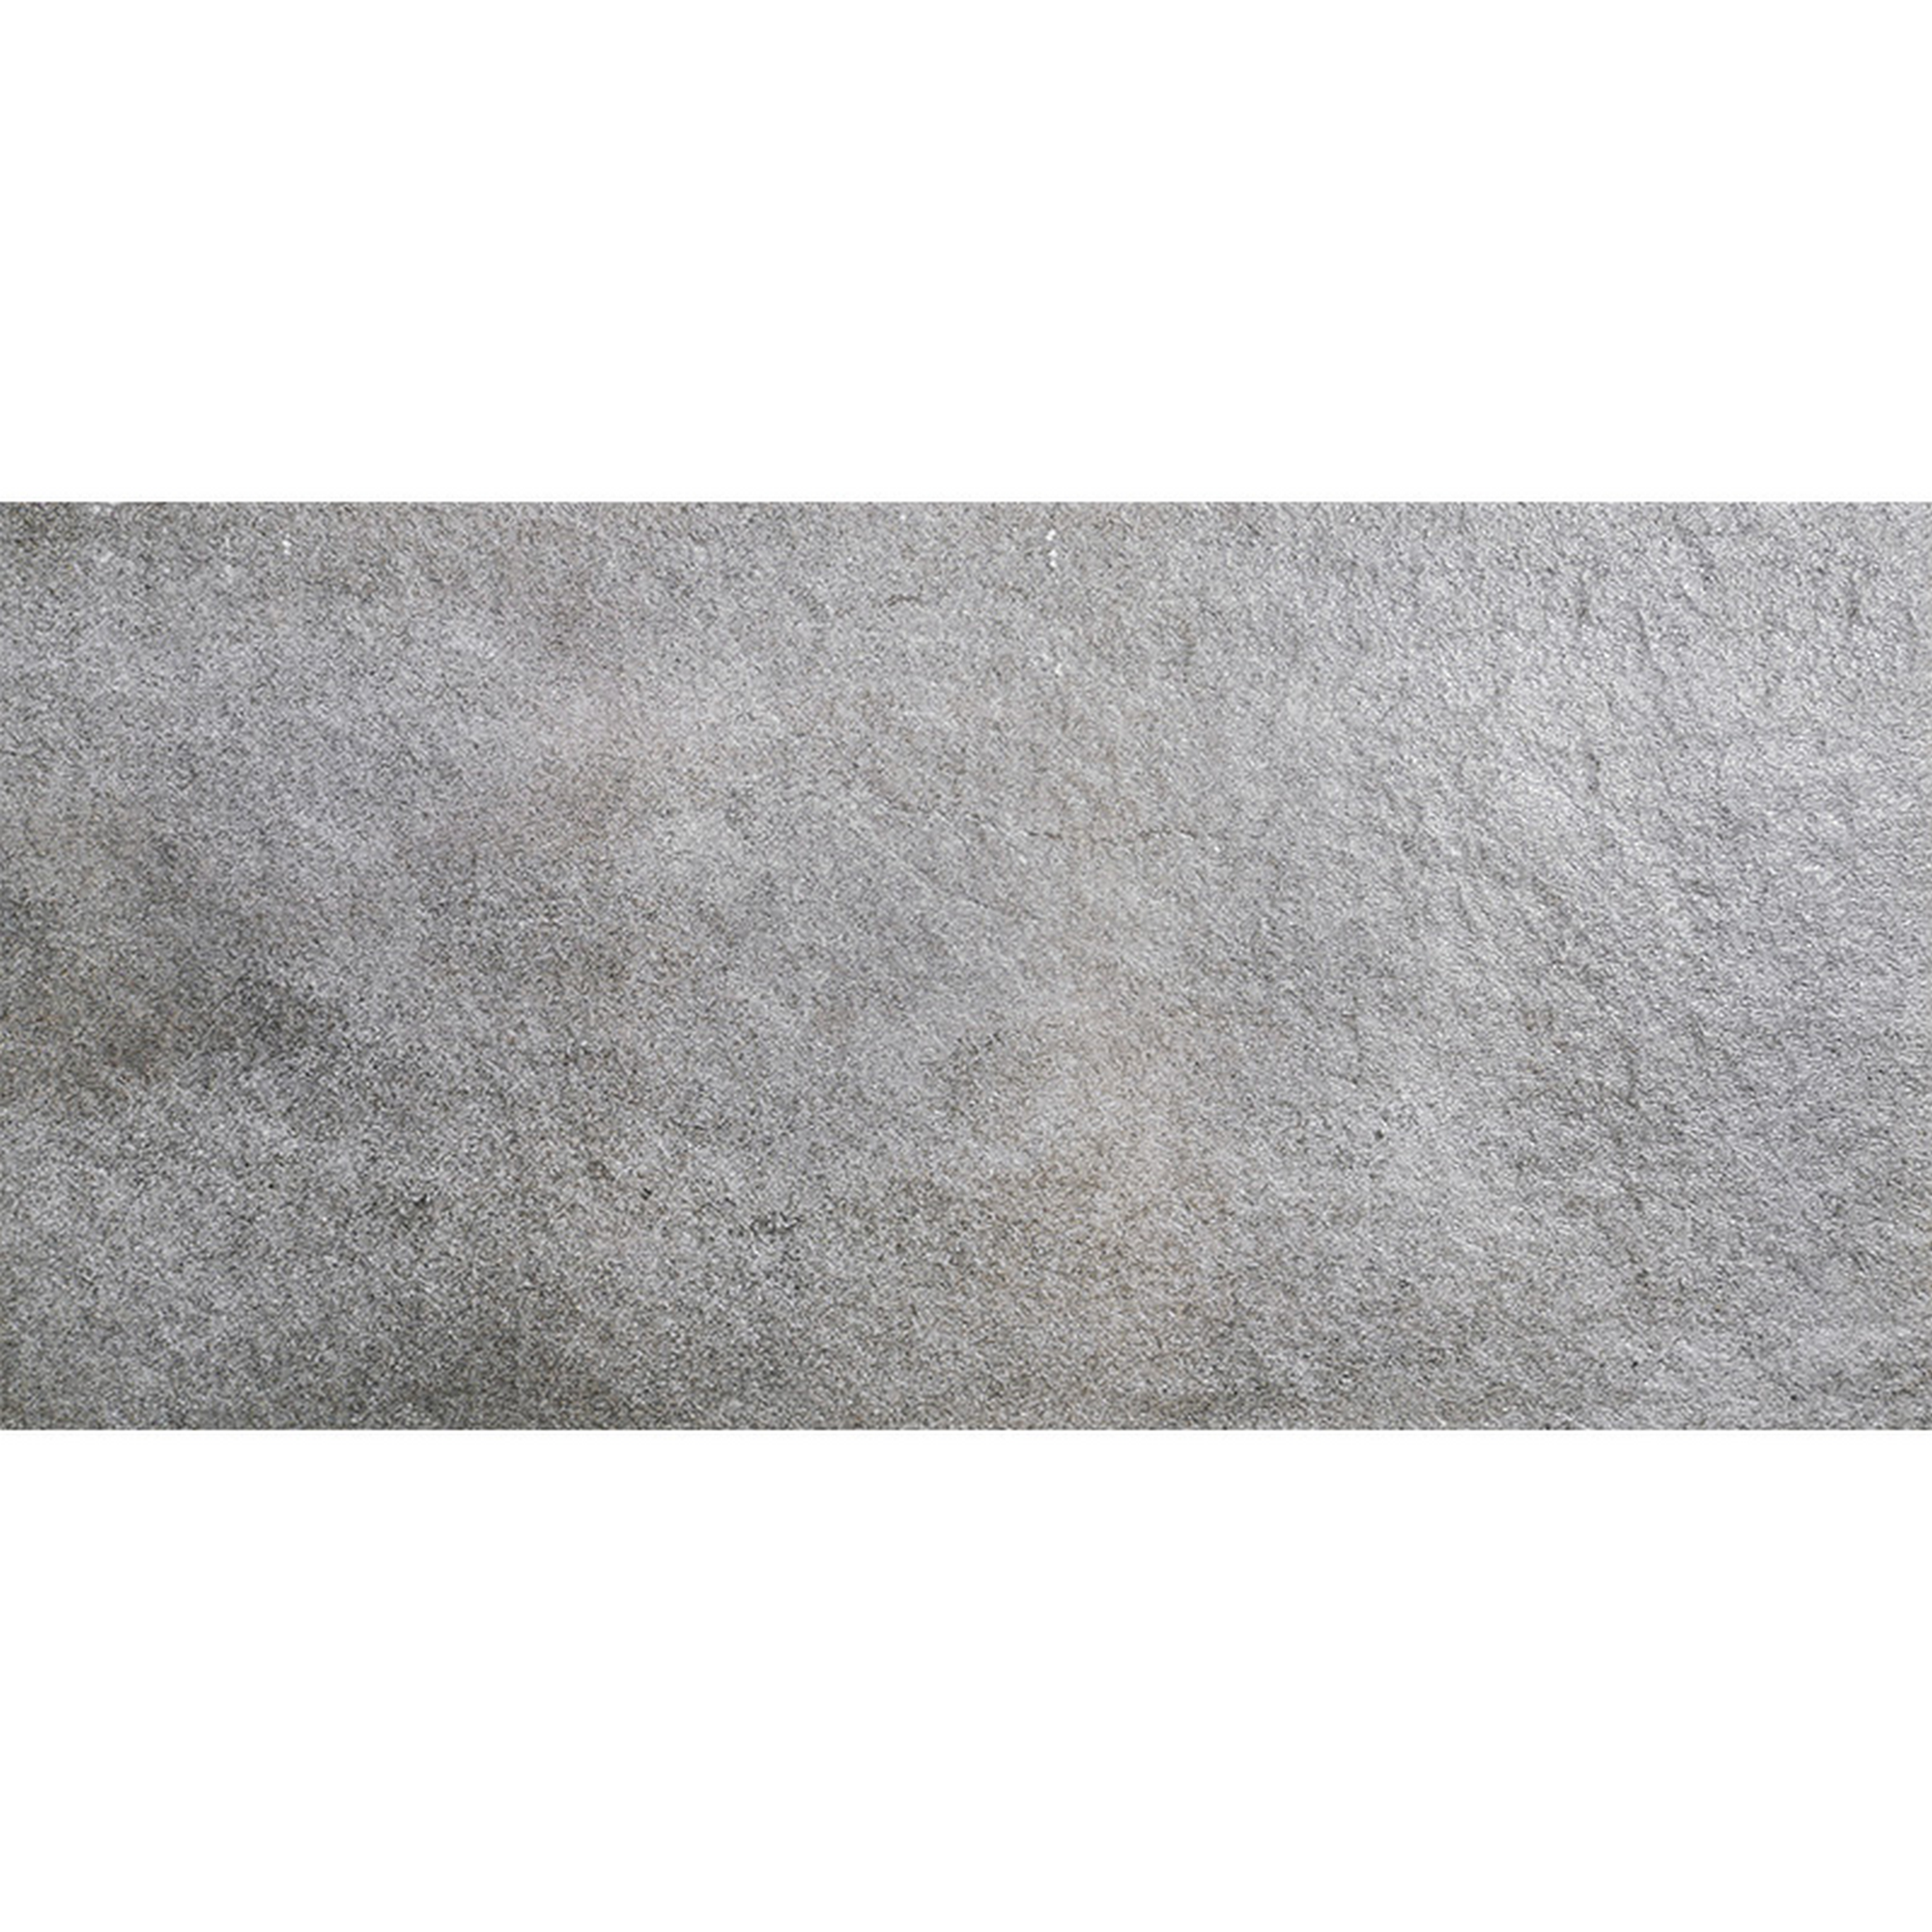 Terrassenplatte 'T-Court Deluxe' basaltgrau 60 x 40 x 4 cm + product picture